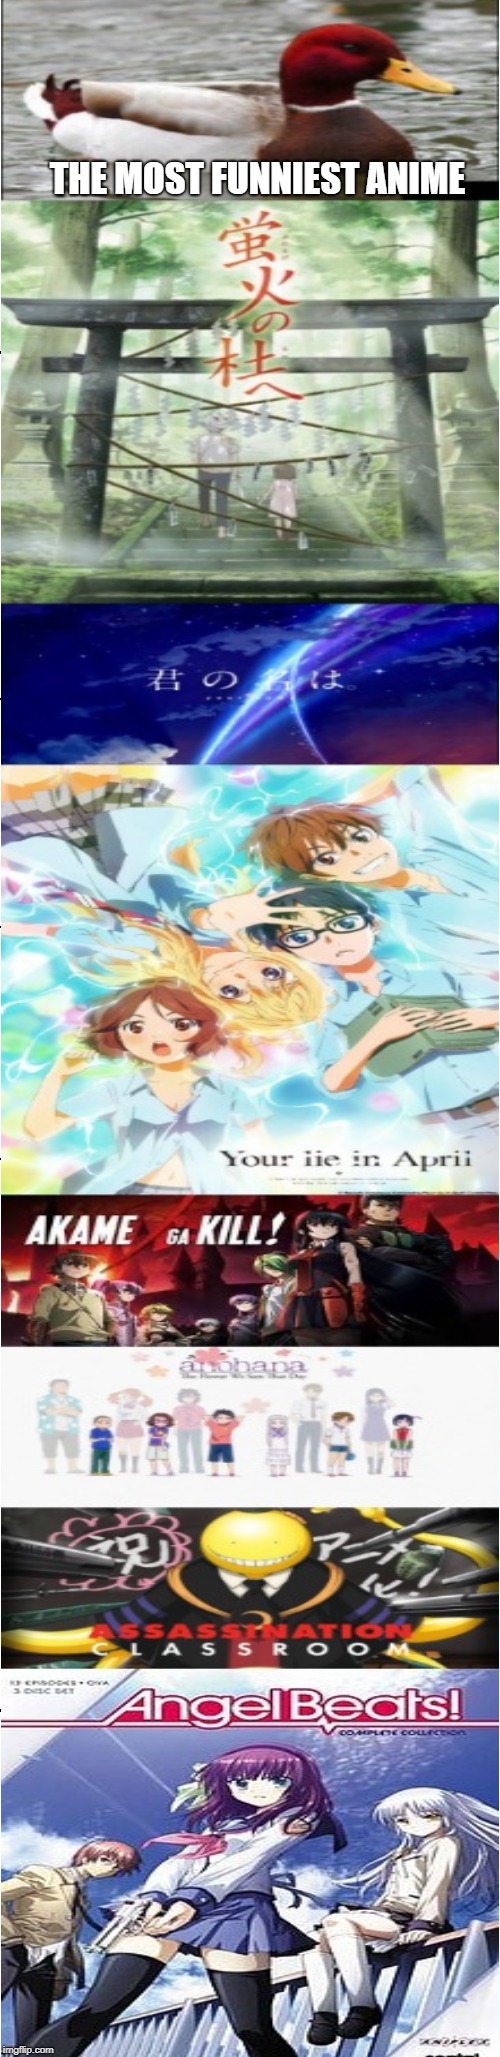 Top 10 Funniest Anime